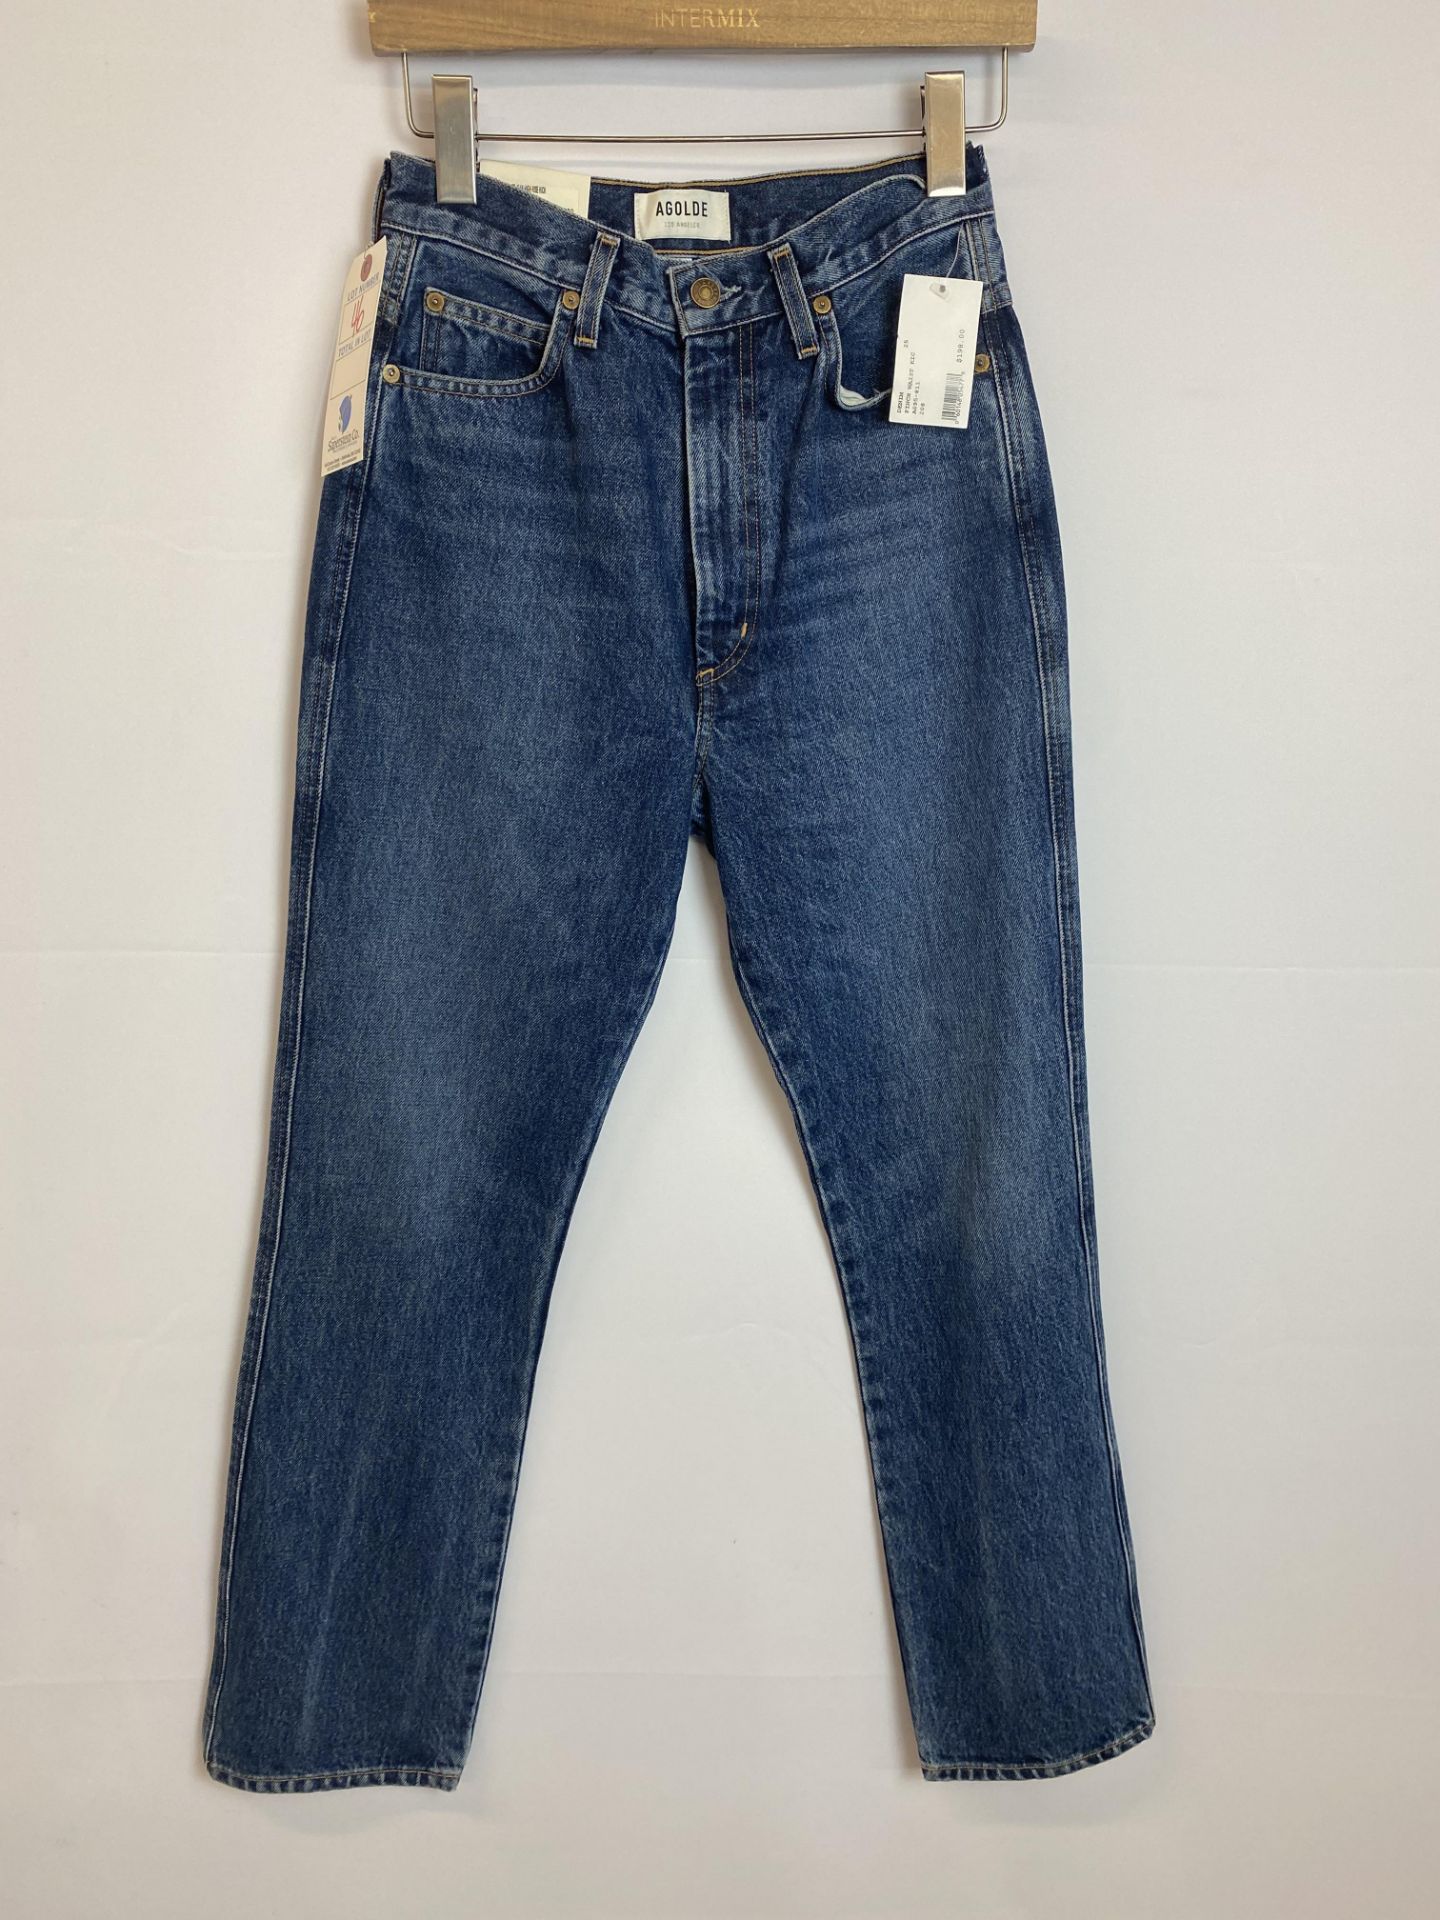 Agolde Pinch Waist Denim High Rise Kick Jean, Size 25, Original Retail Price: $198